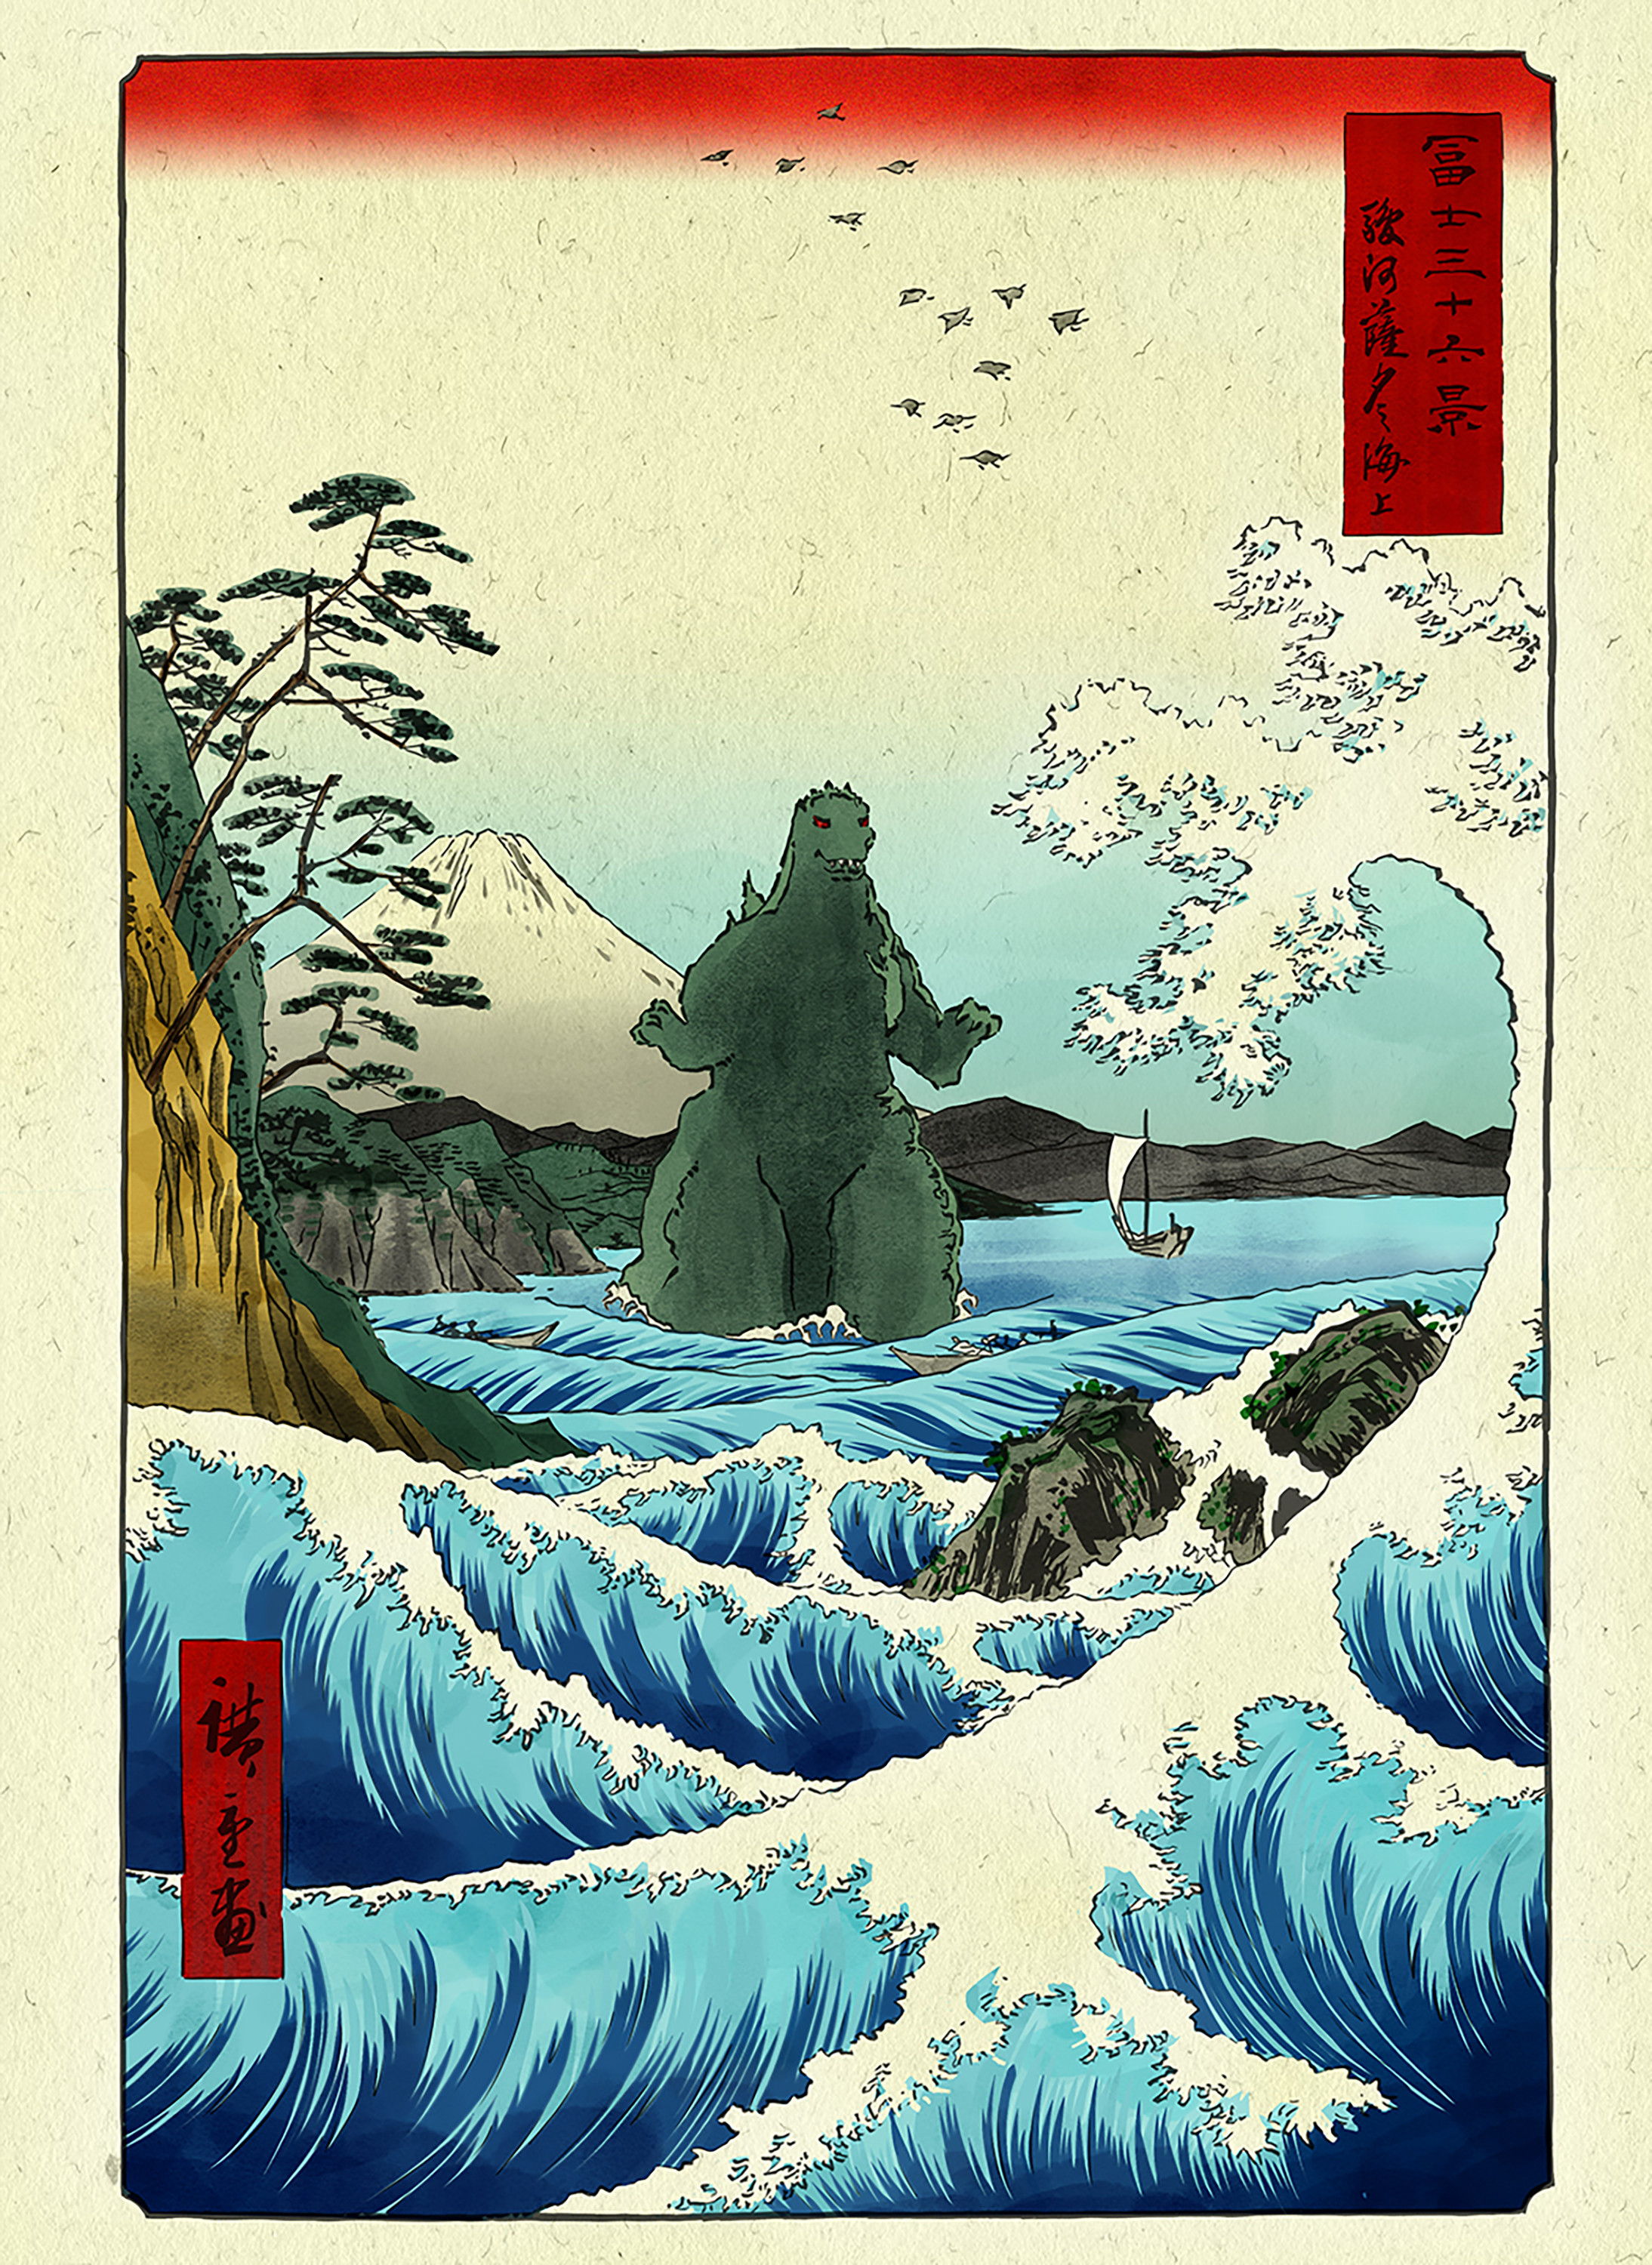 Woodcut style Kaiju print
Based on the Japanese woodcut "Suruga satta no kaijō" by Ando Hiroshige.